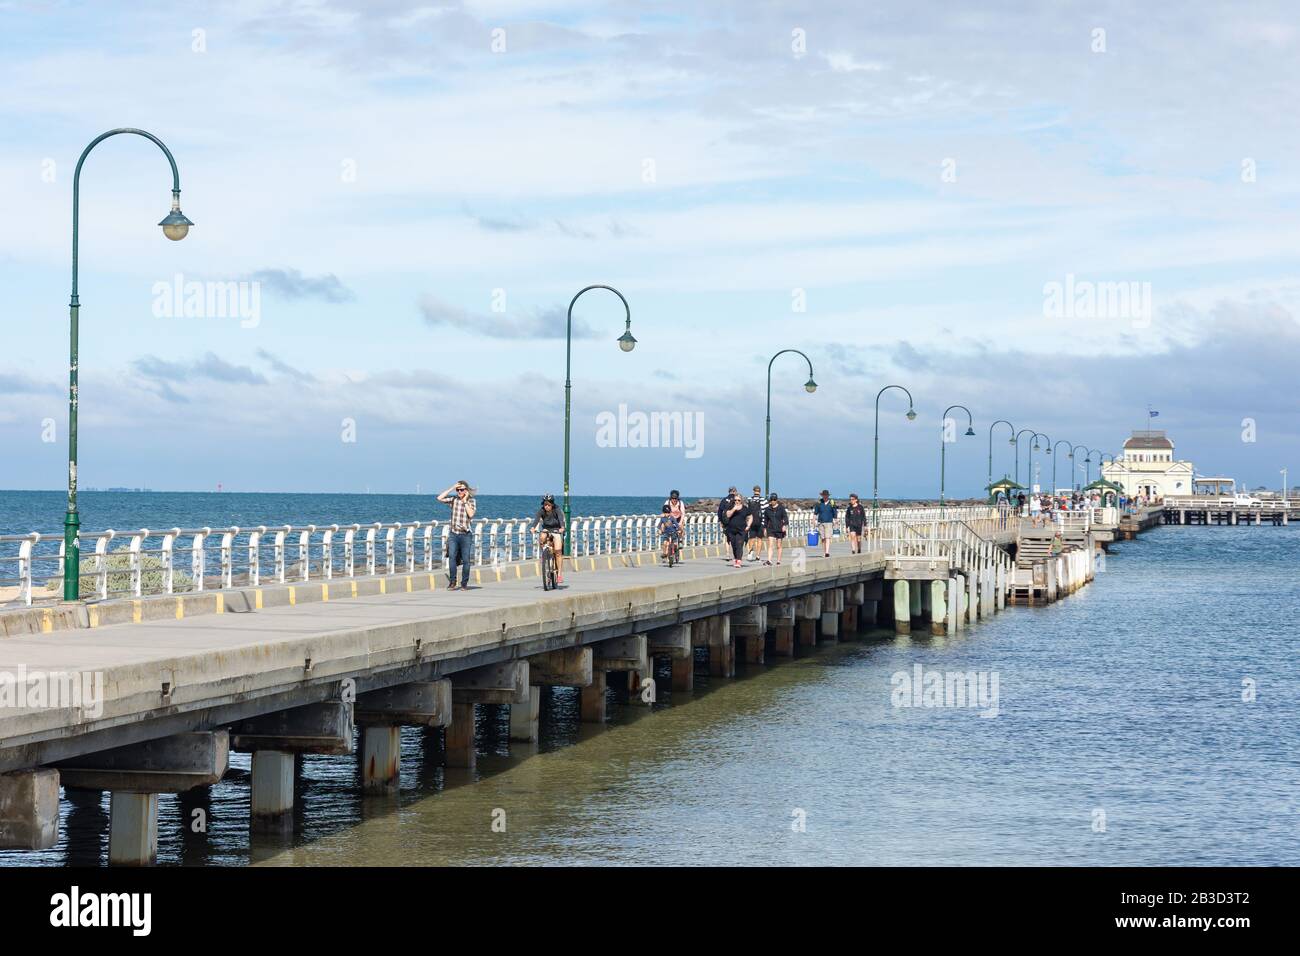 St Kilda Pier from Esplanade, St Kilda, Melbourne, Victoria, Australia Stock Photo